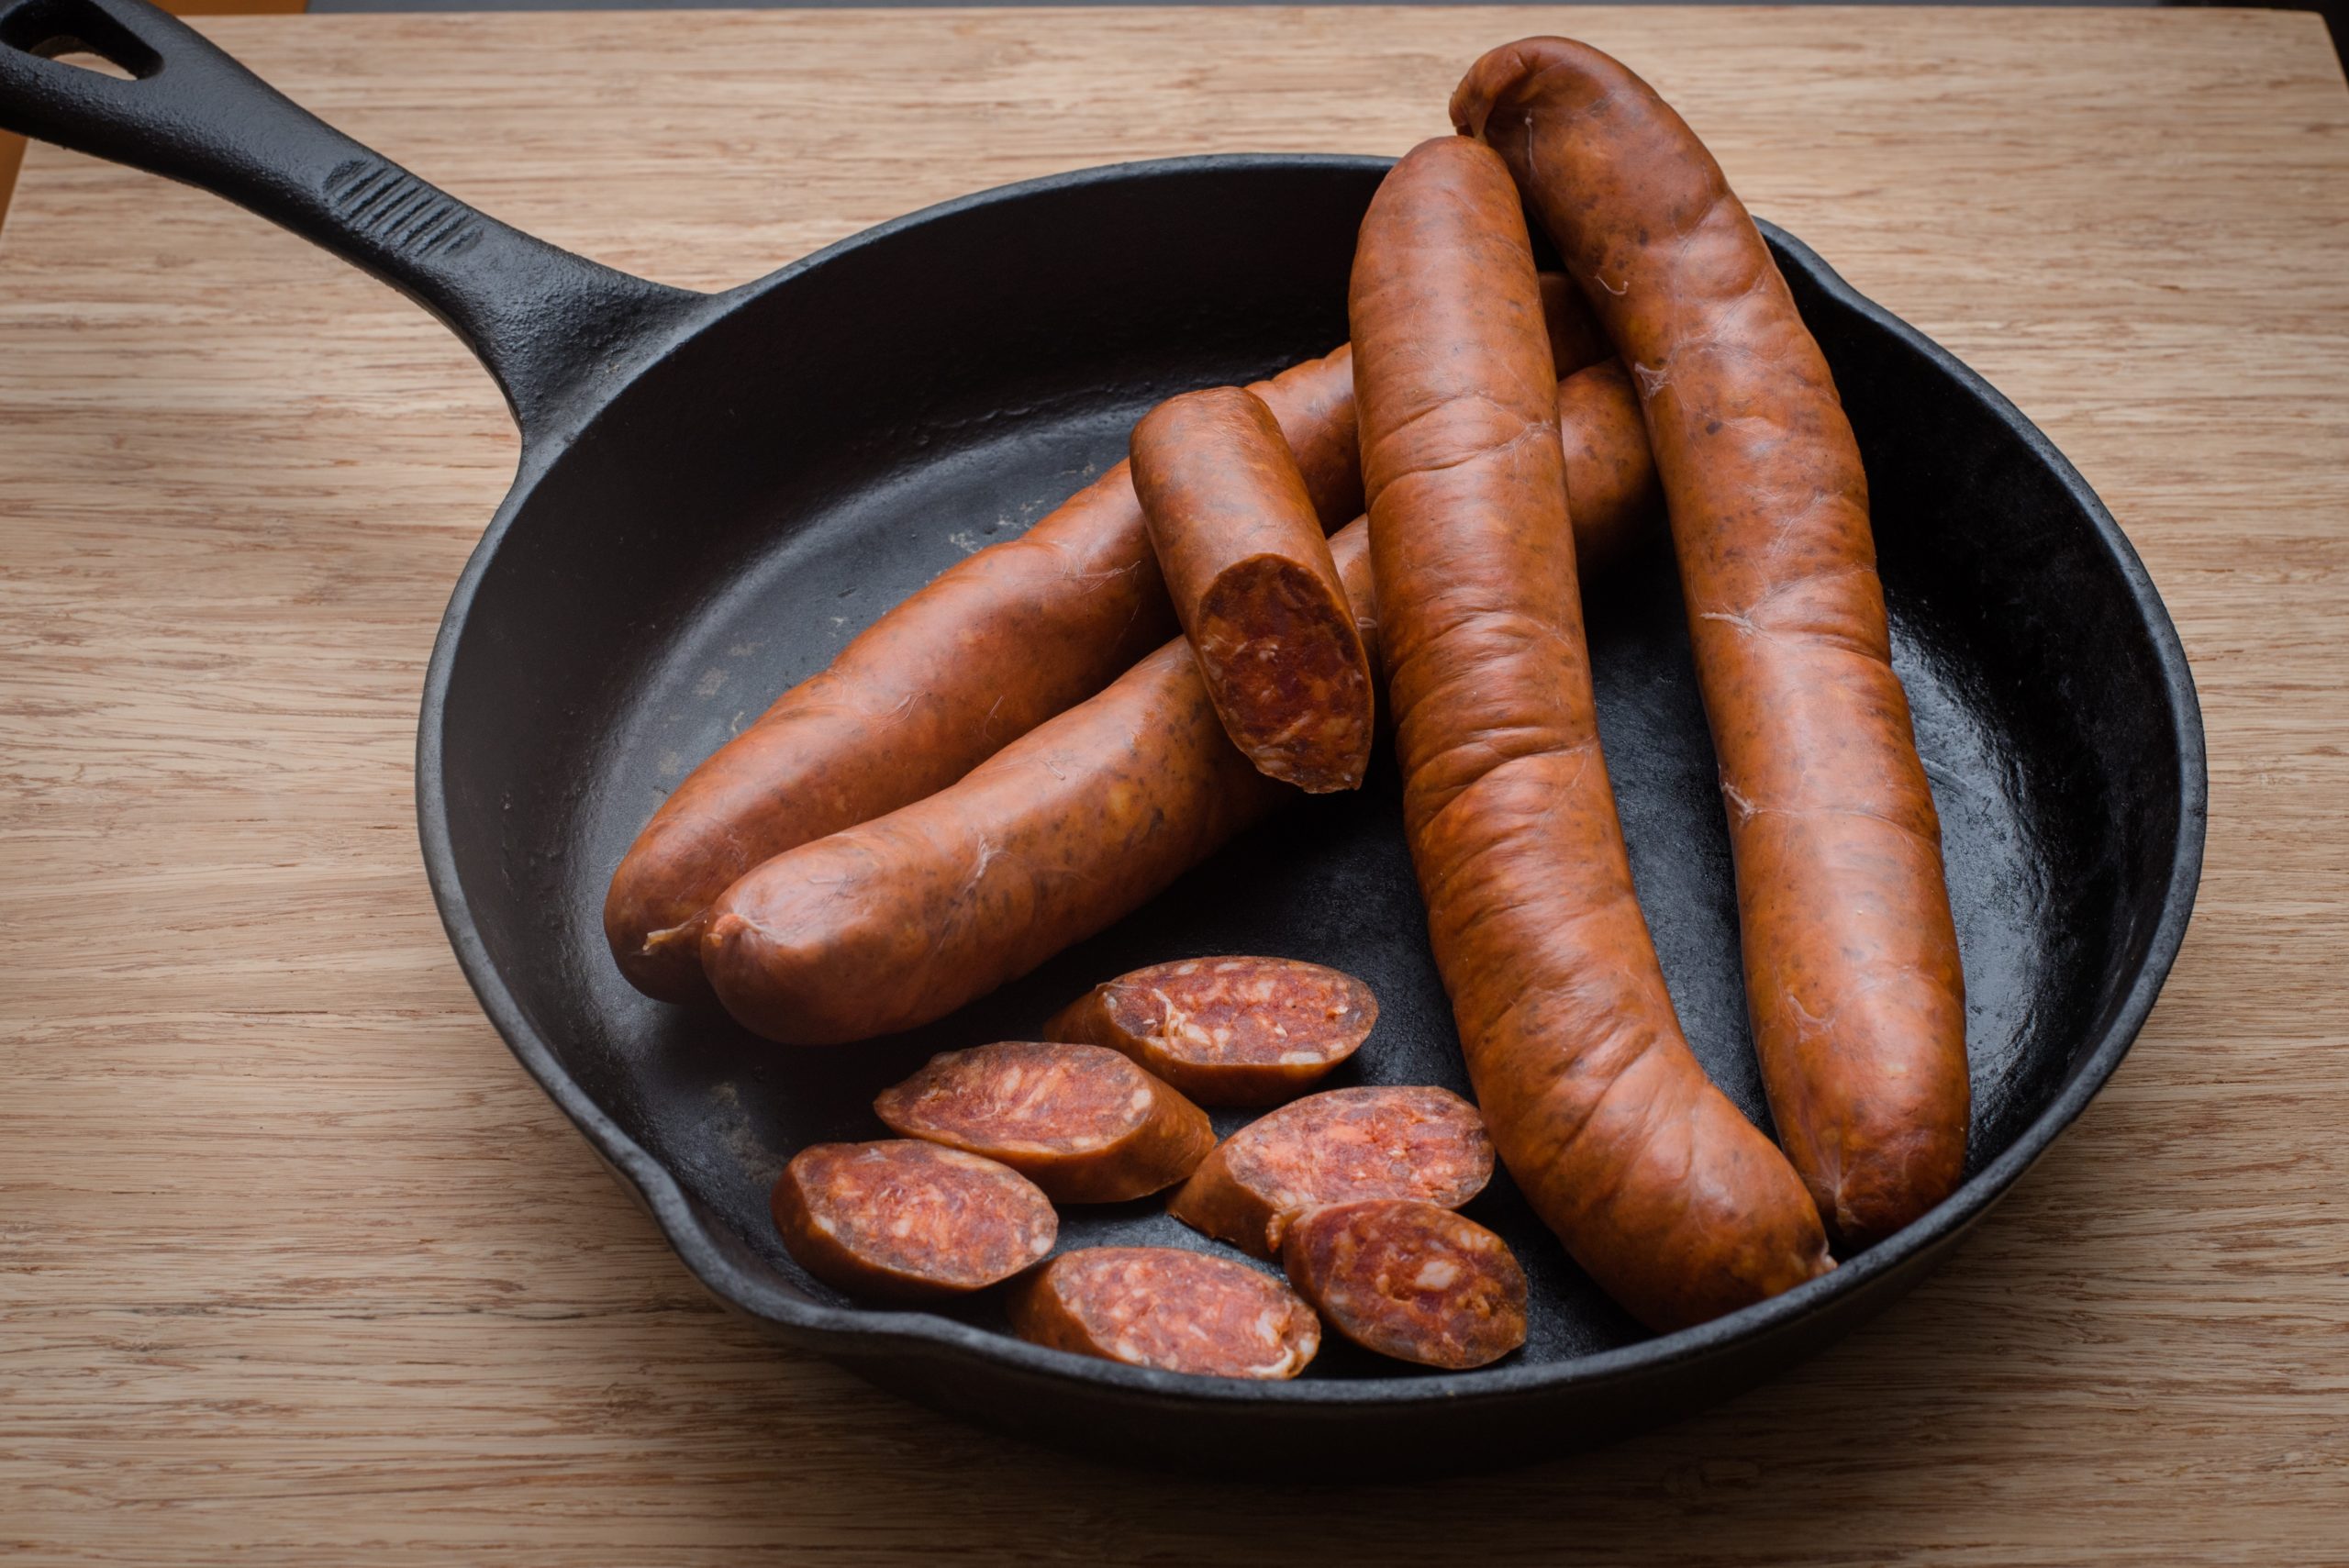 Banquet Brown 'N Serve Sausage Nutrition Facts